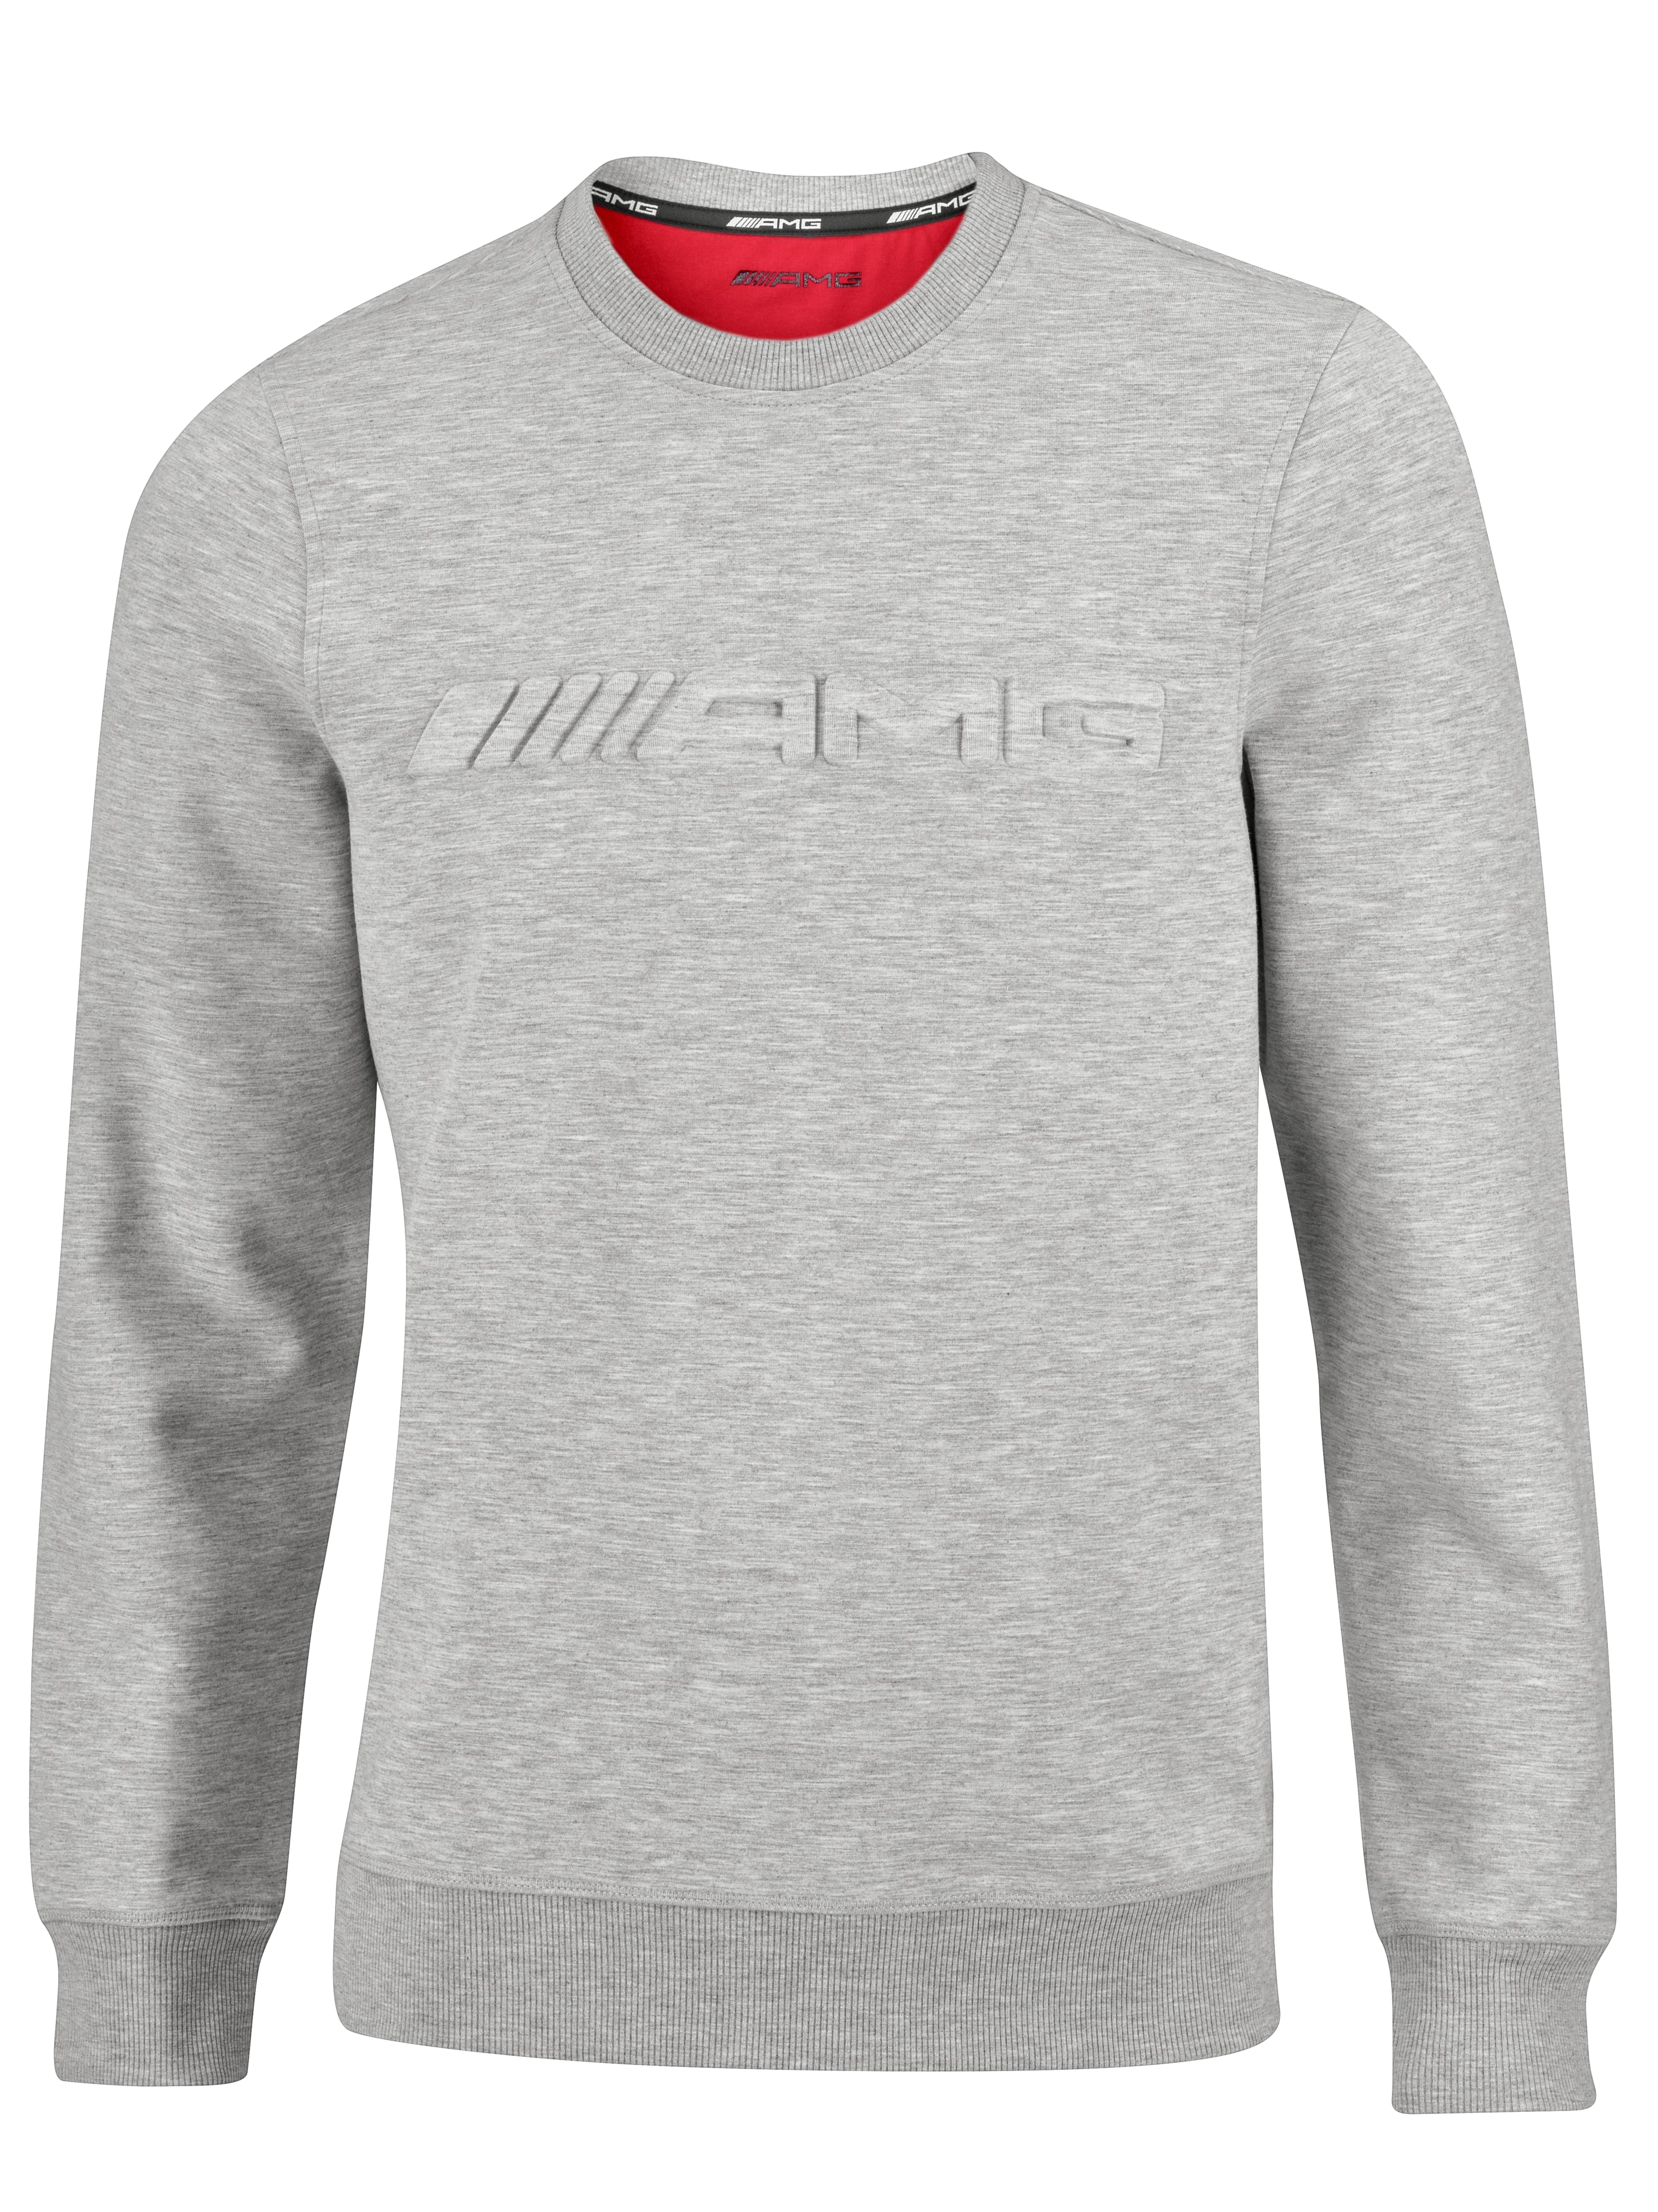 AMG Sweatshirt, Unisex - grau melange, XXL